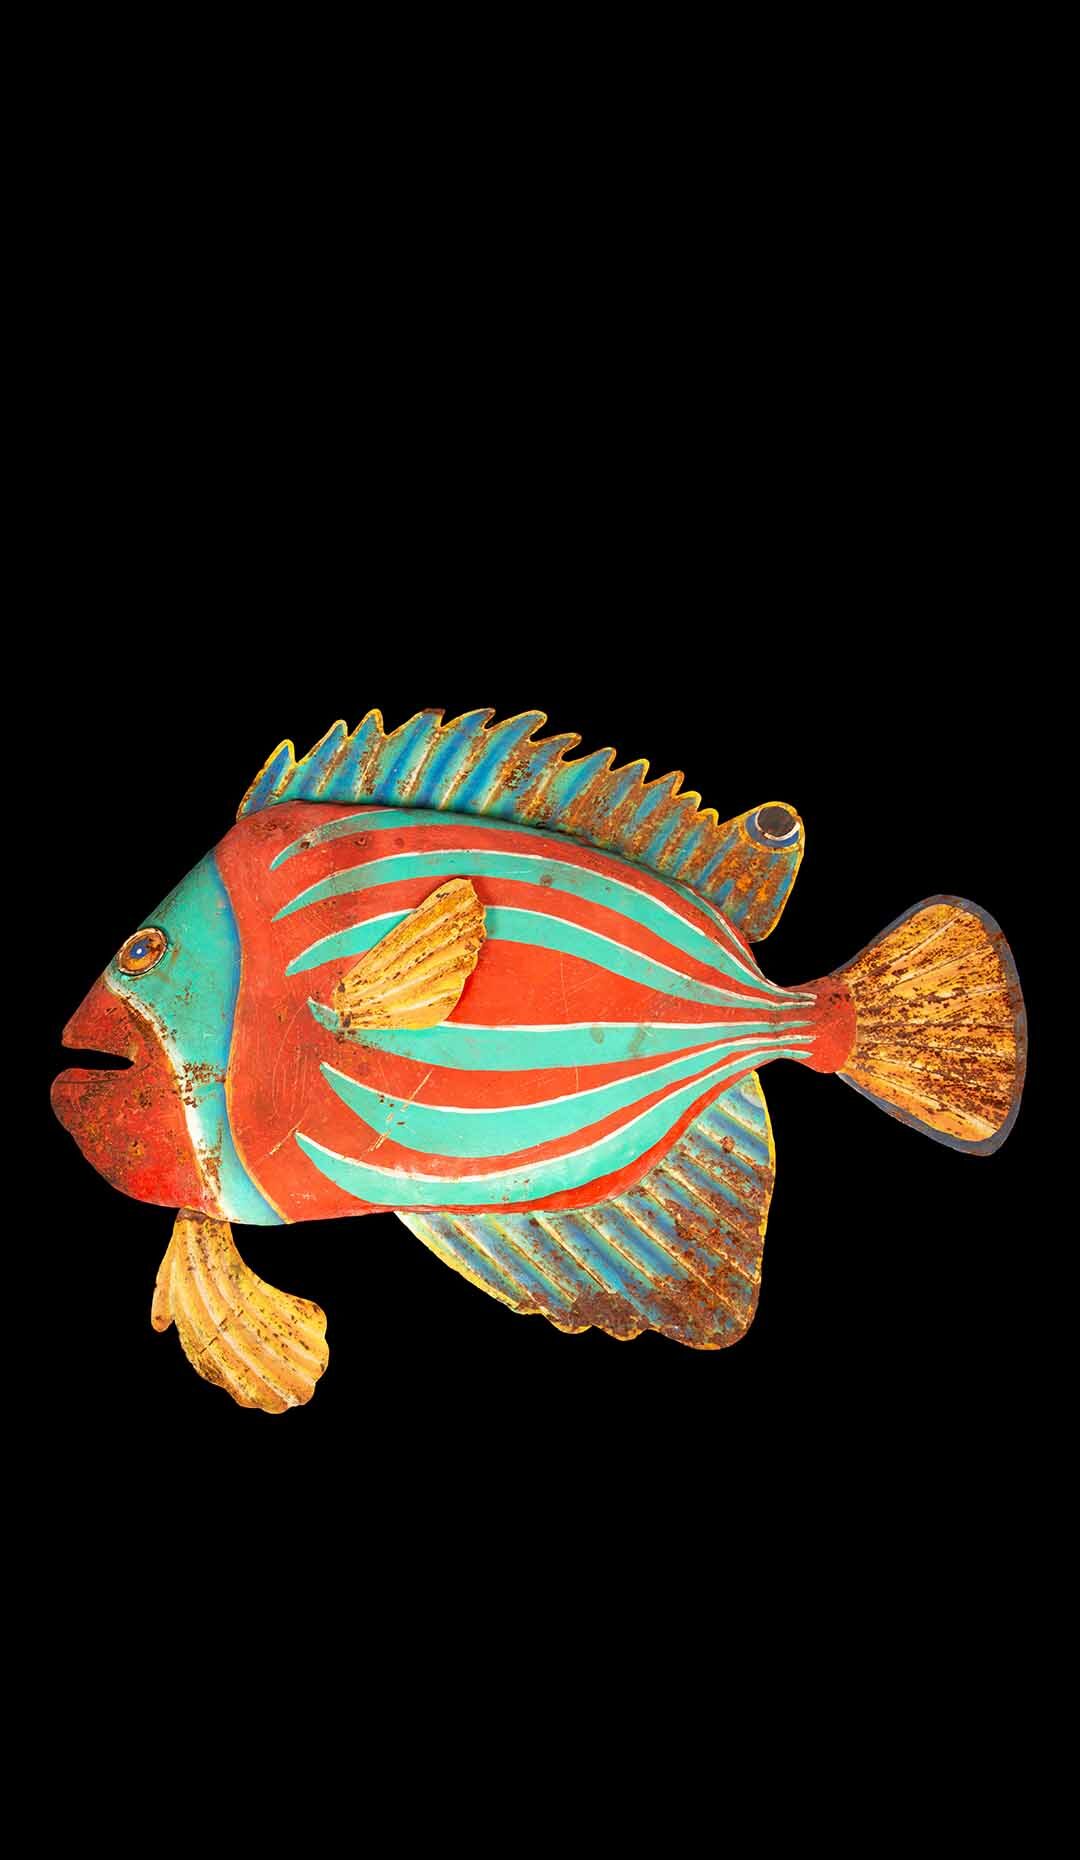 Painted Metal Fish